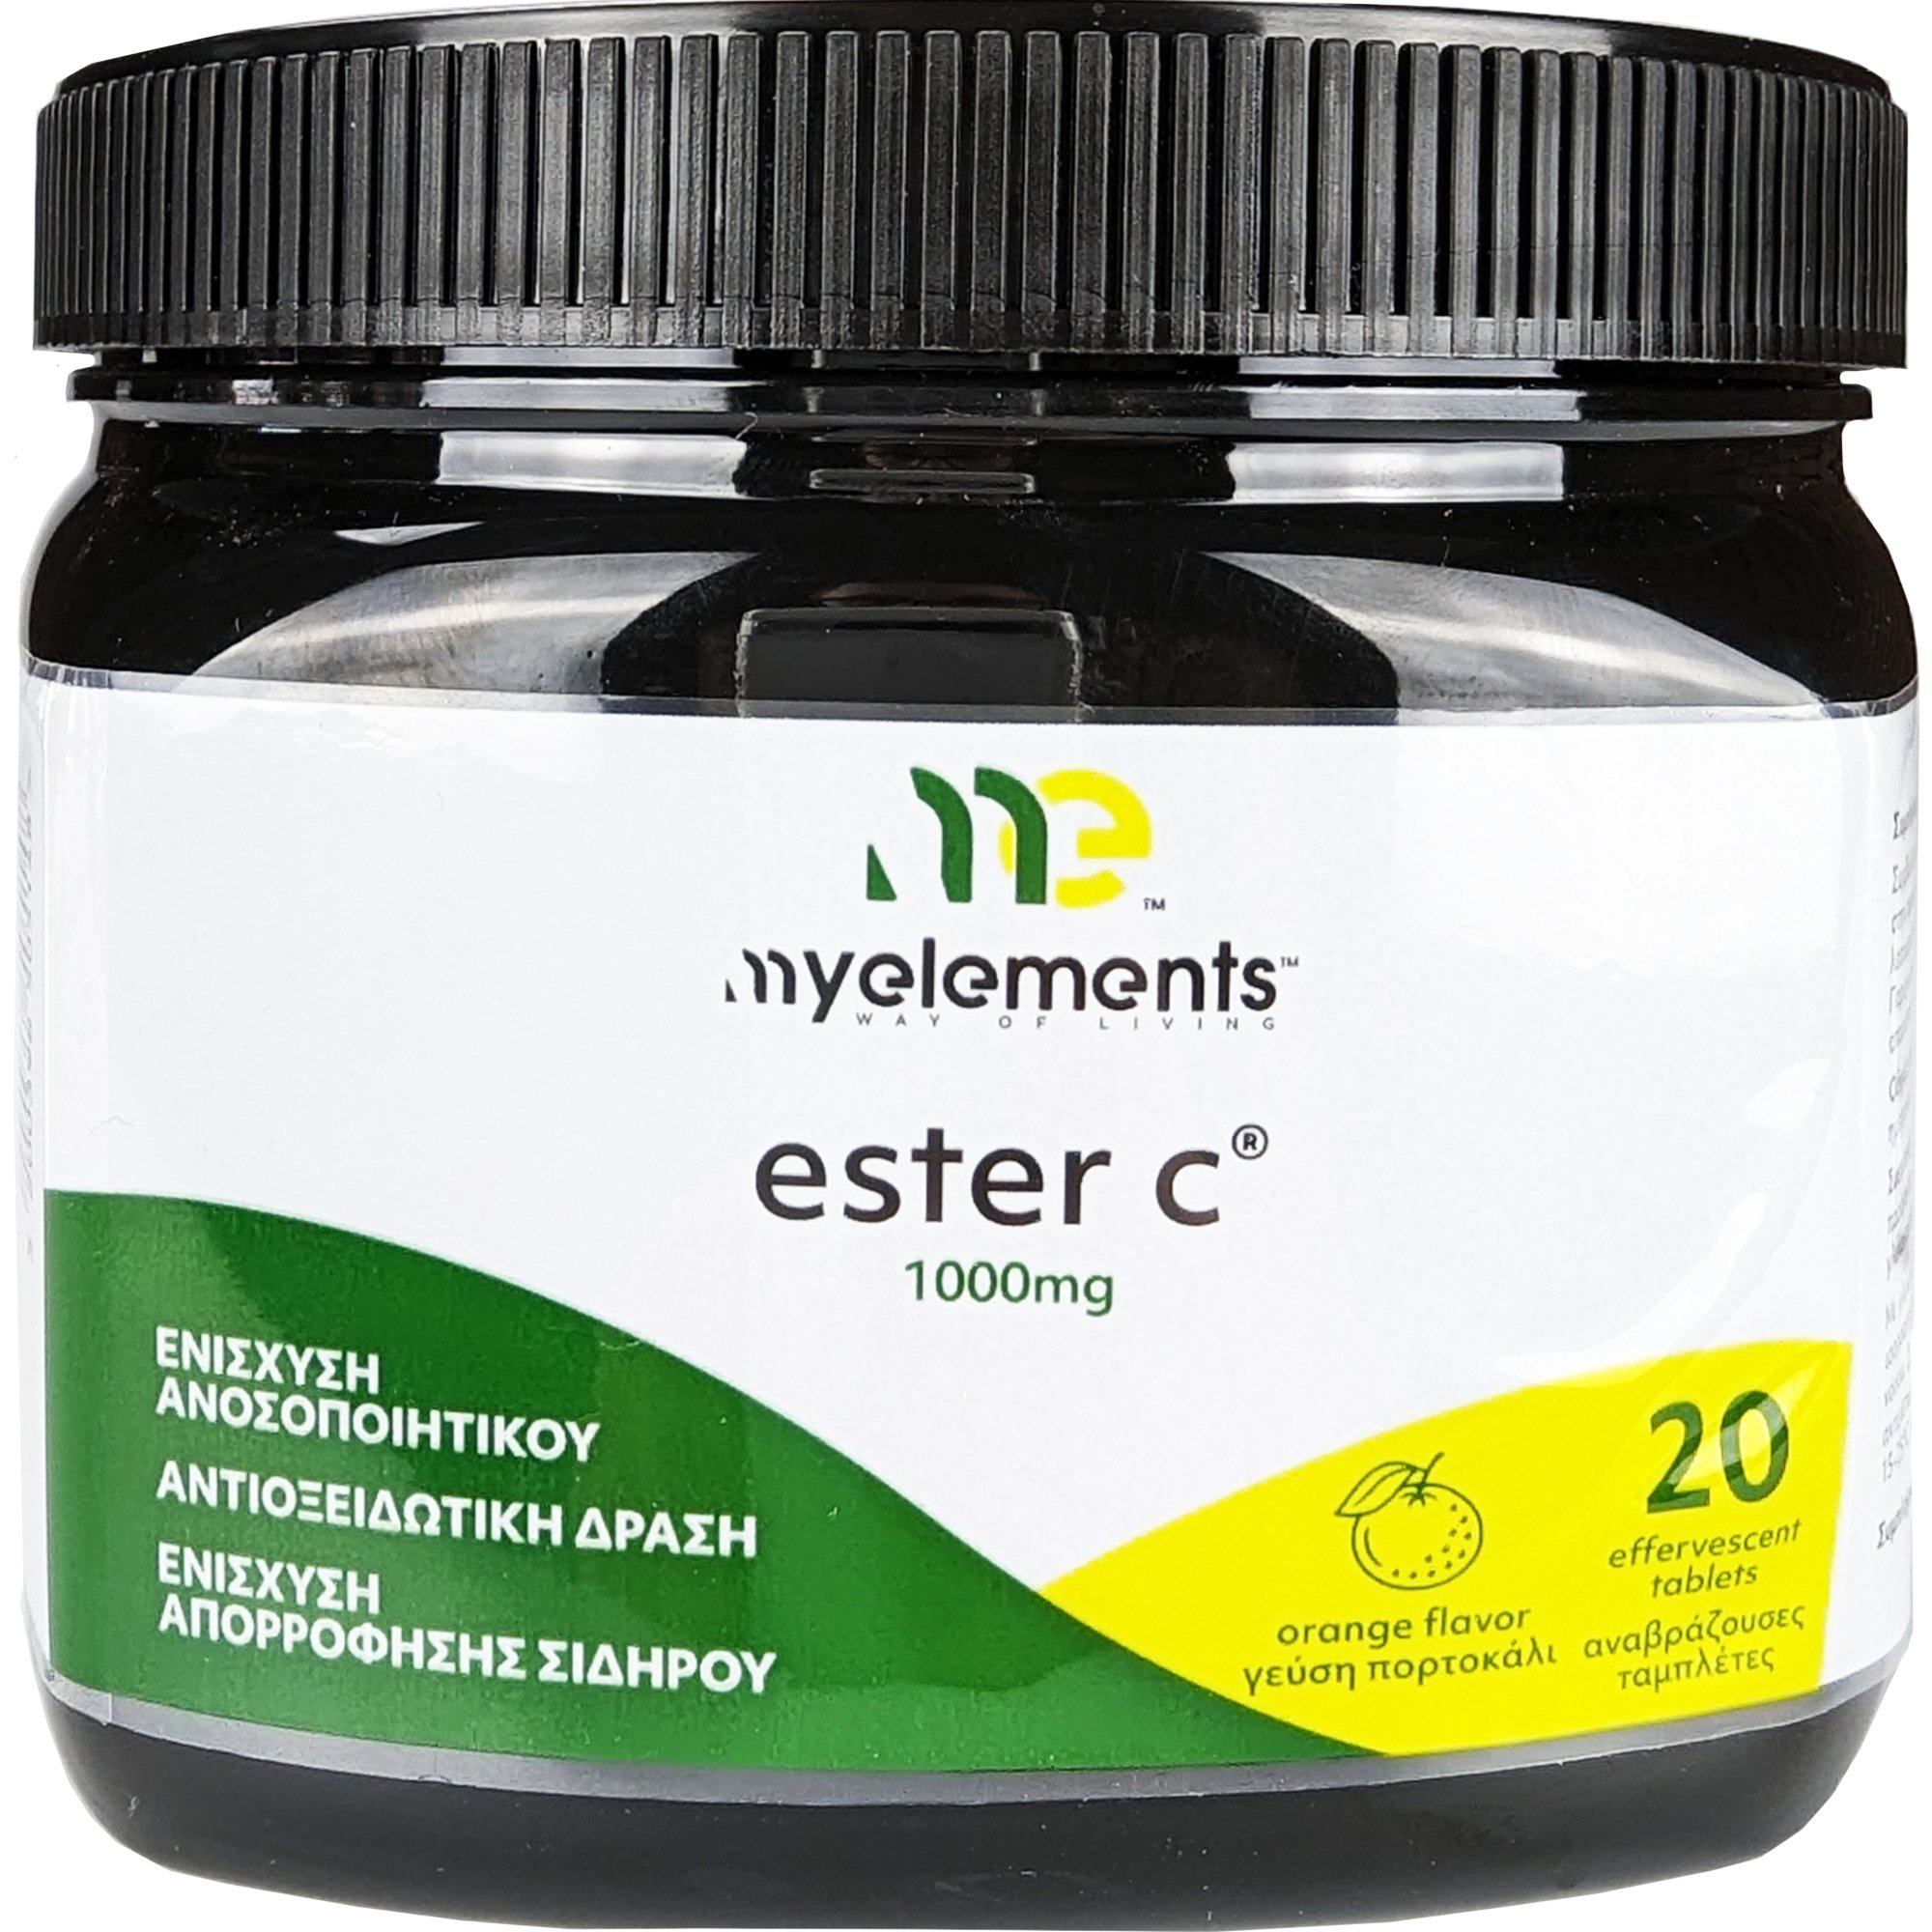 My Elements Ester C 1000mg Συμπλήρωμα Διατροφής Βιταμίνης C Υψηλής Απορροφησιμότητας Ήπια στο Στομάχι για Ενίσχυση του Ανοσοποιητικού με Αντιοξειδωτική Δράση με Γεύση Πορτοκάλι 20 Effer.tabs 58070